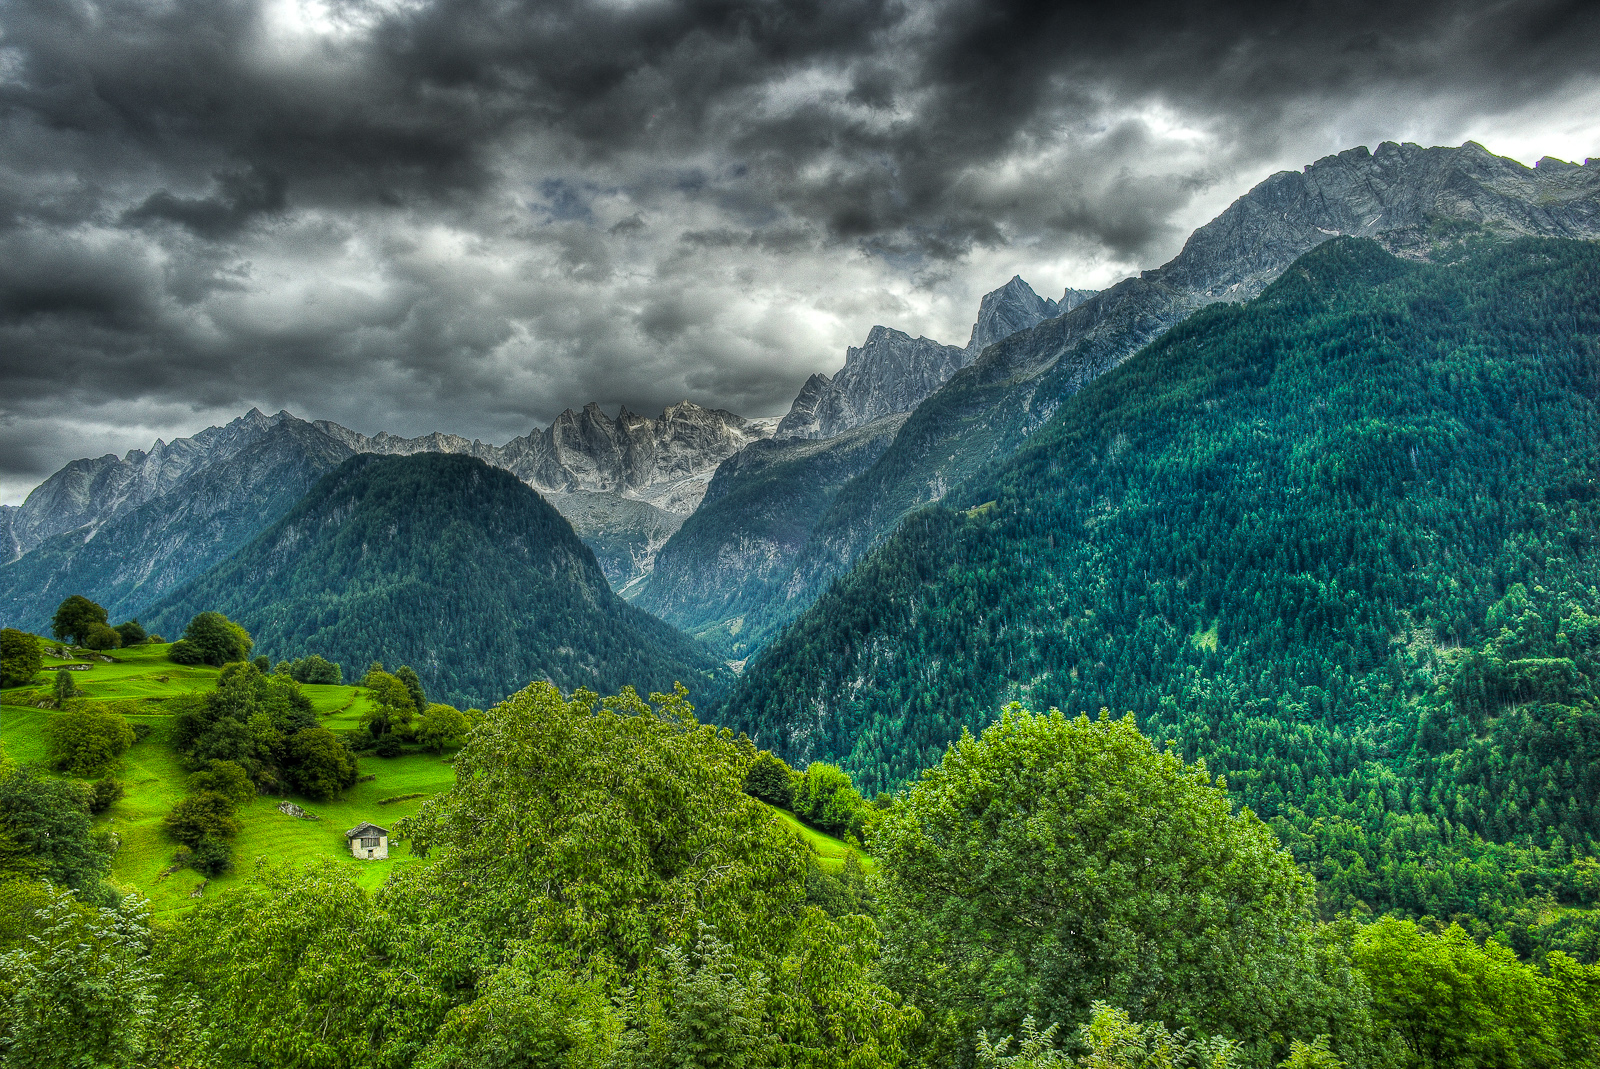 View of the Alps from Soglio, Switzerland